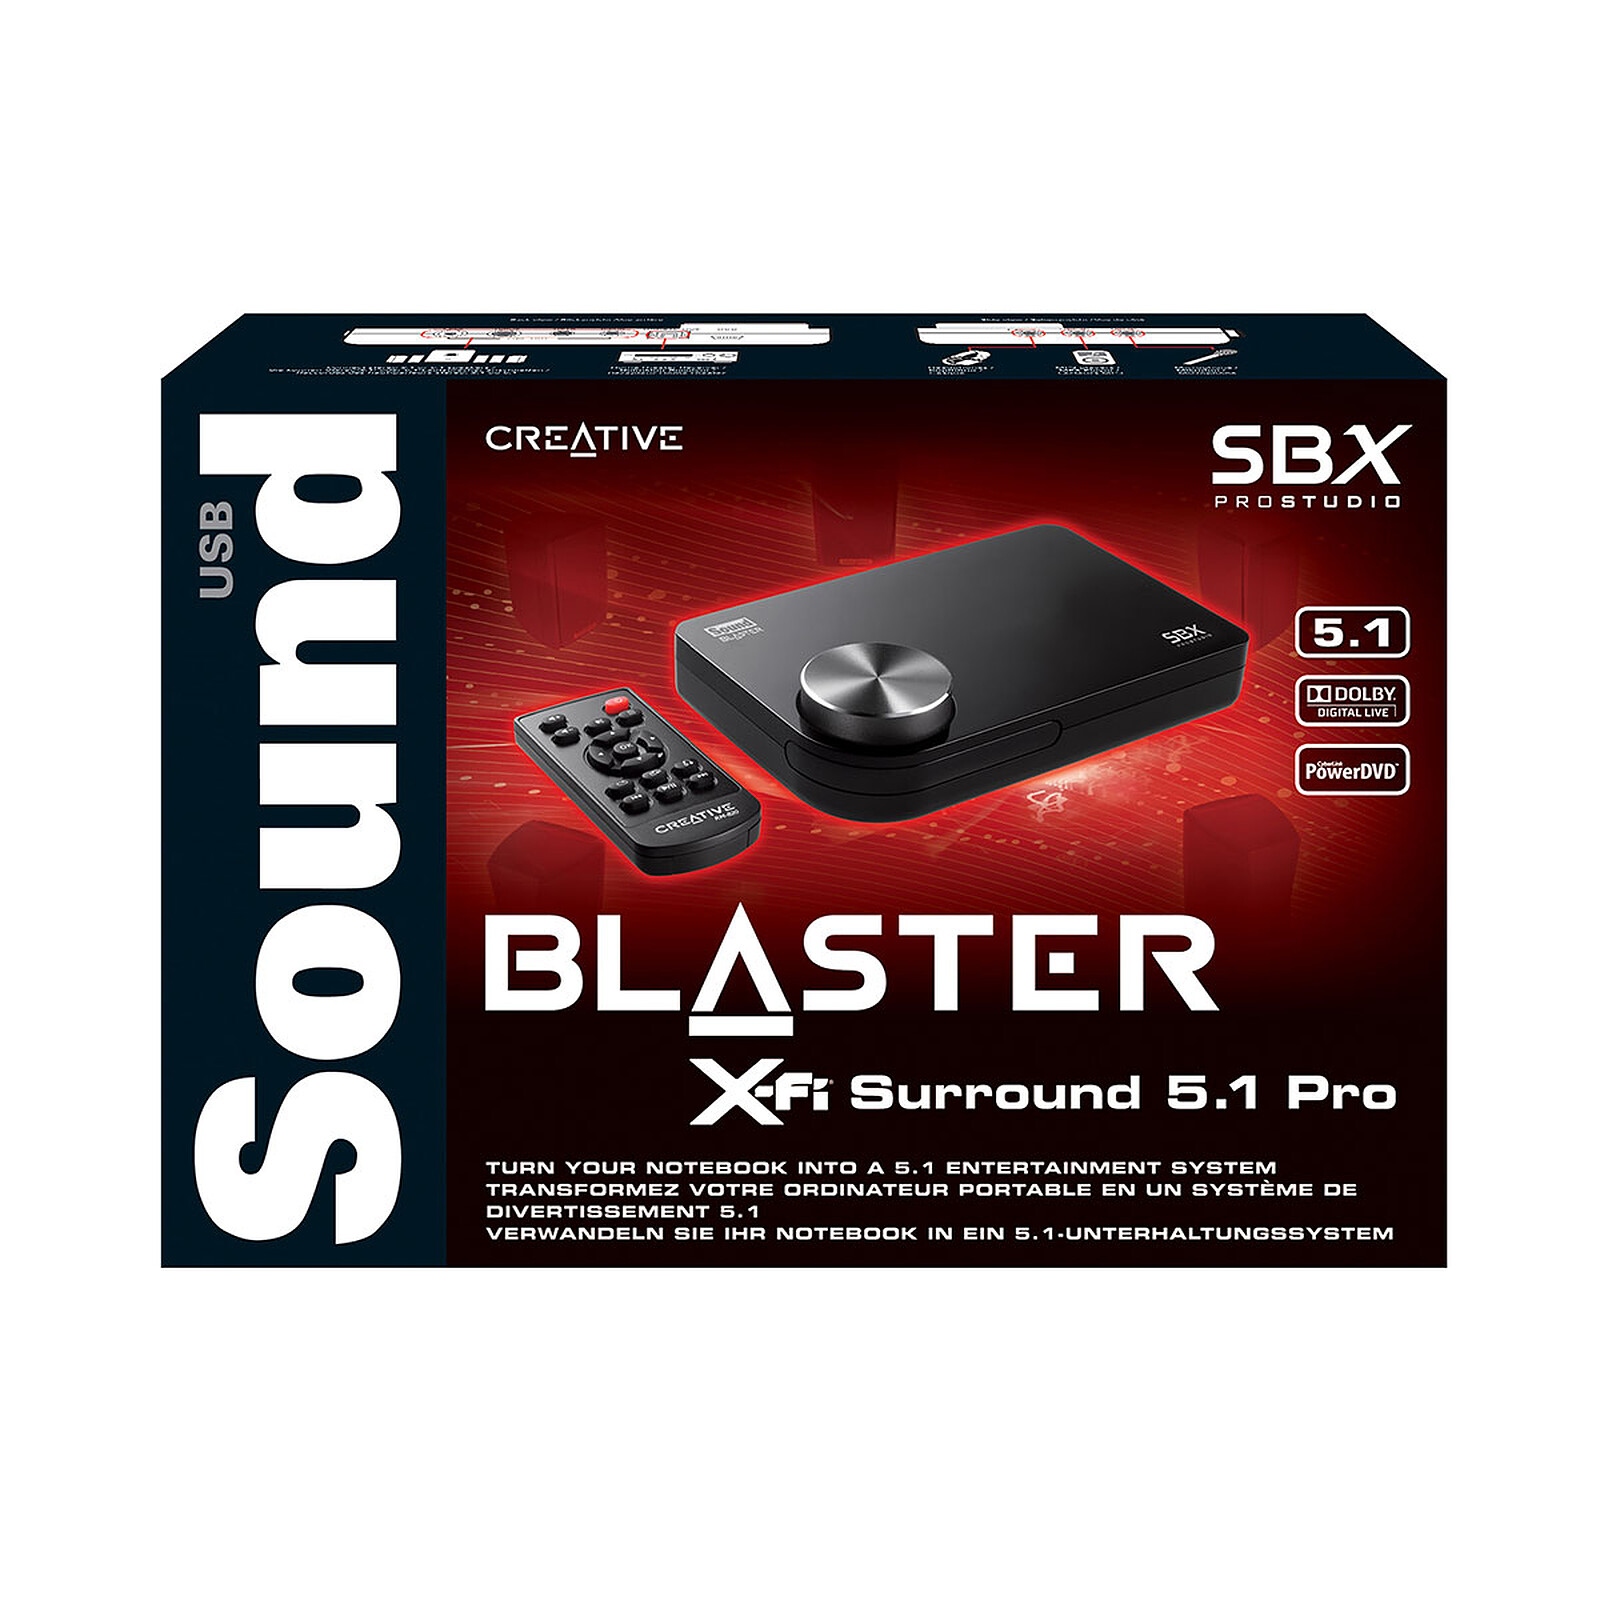 negro Creative SB X-Fi Surround 5.1 Pro v3- Tarjeta de sonido externa USB con SBX Pro Studio, para Windows 10 